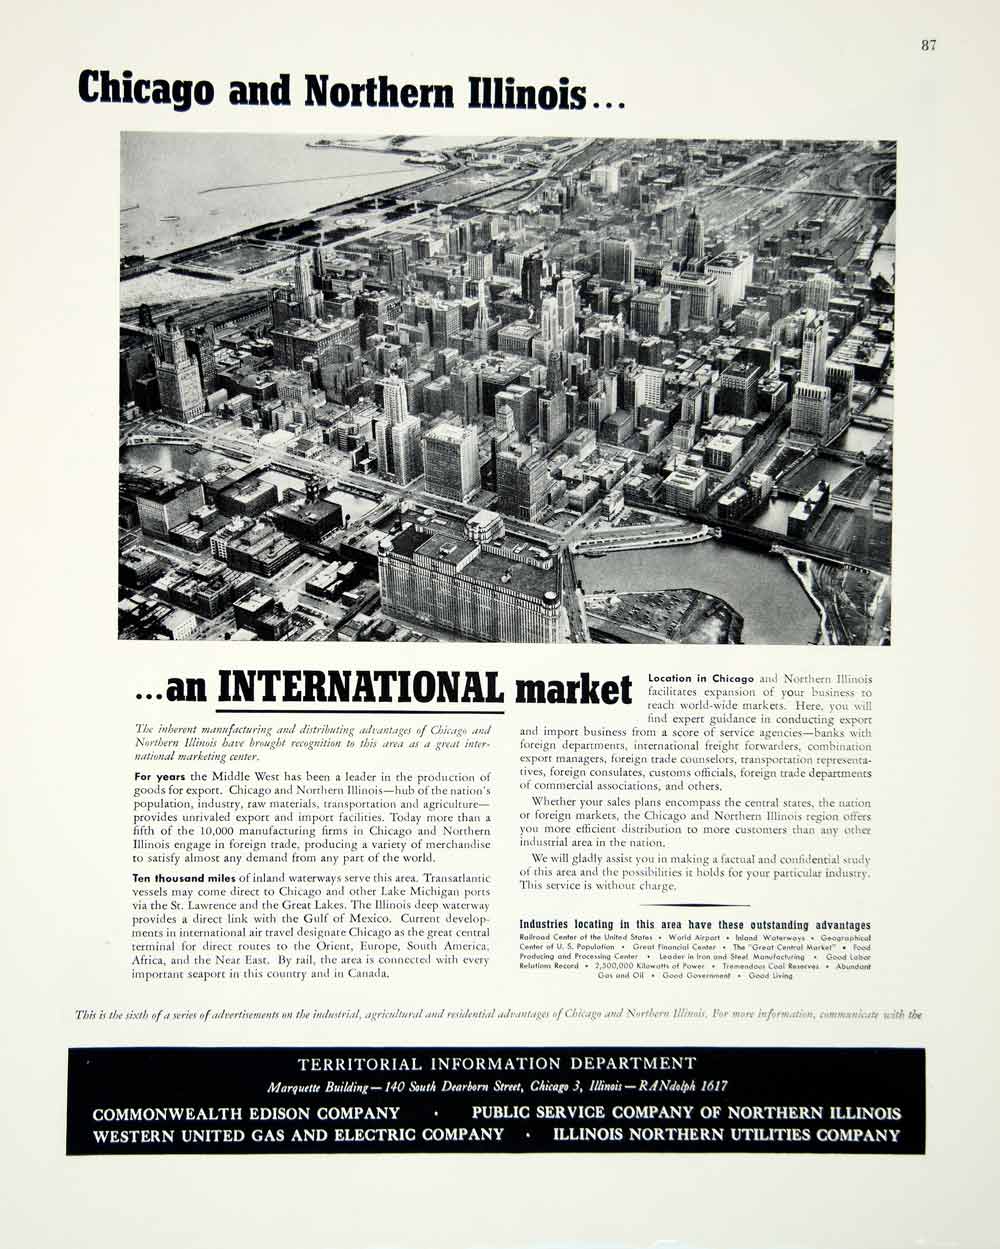 1946 Ad Territorial Information Department Chicago Illinois Cityscape FTM1